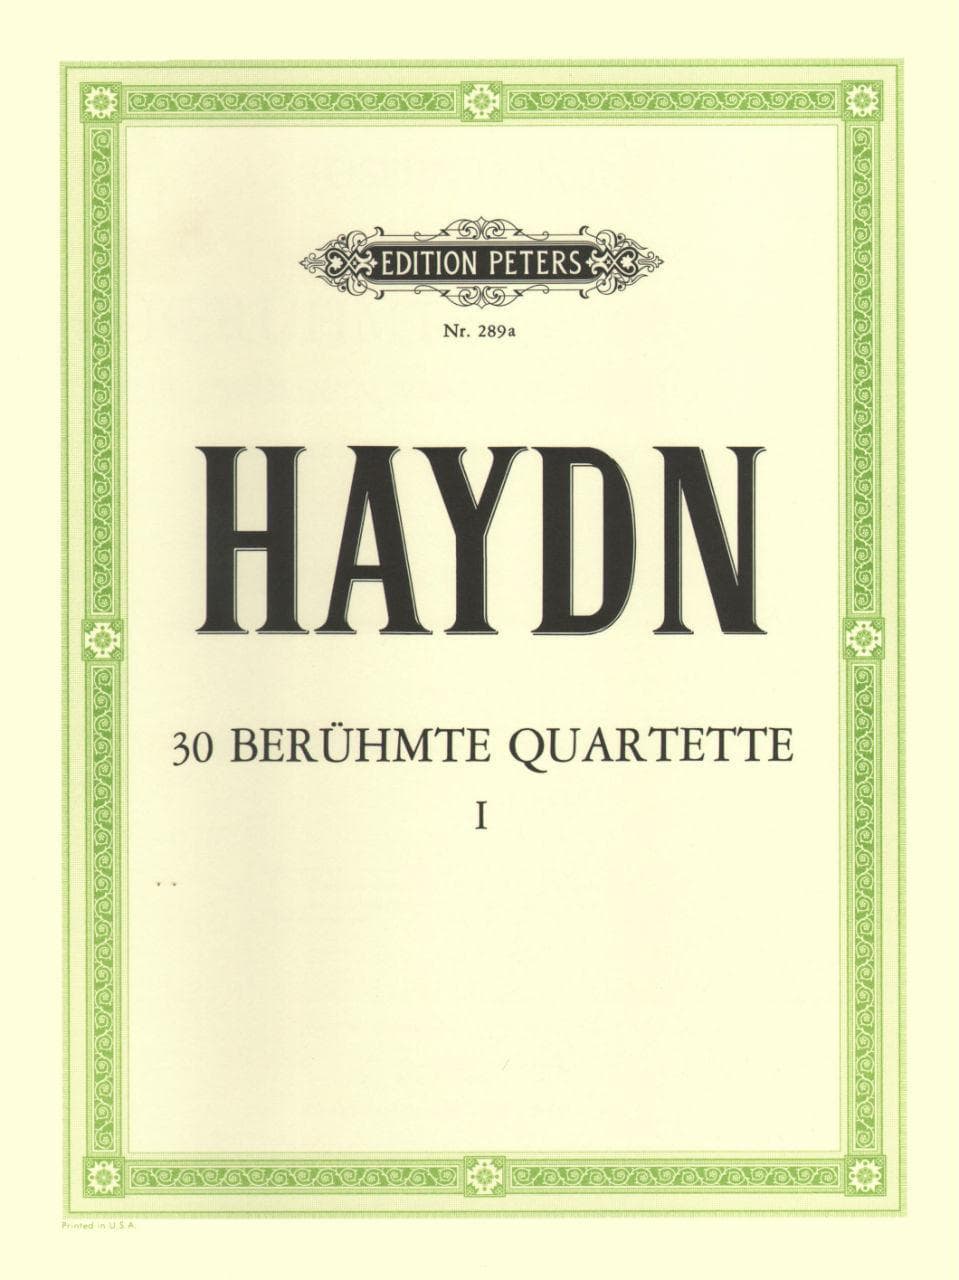 Haydn, Franz Joseph - 83 Quartets, Volume 1: 14 Famous Quartets - String Quartet - edited by Andreas Moser and Hugo Dechert - Edition Peters